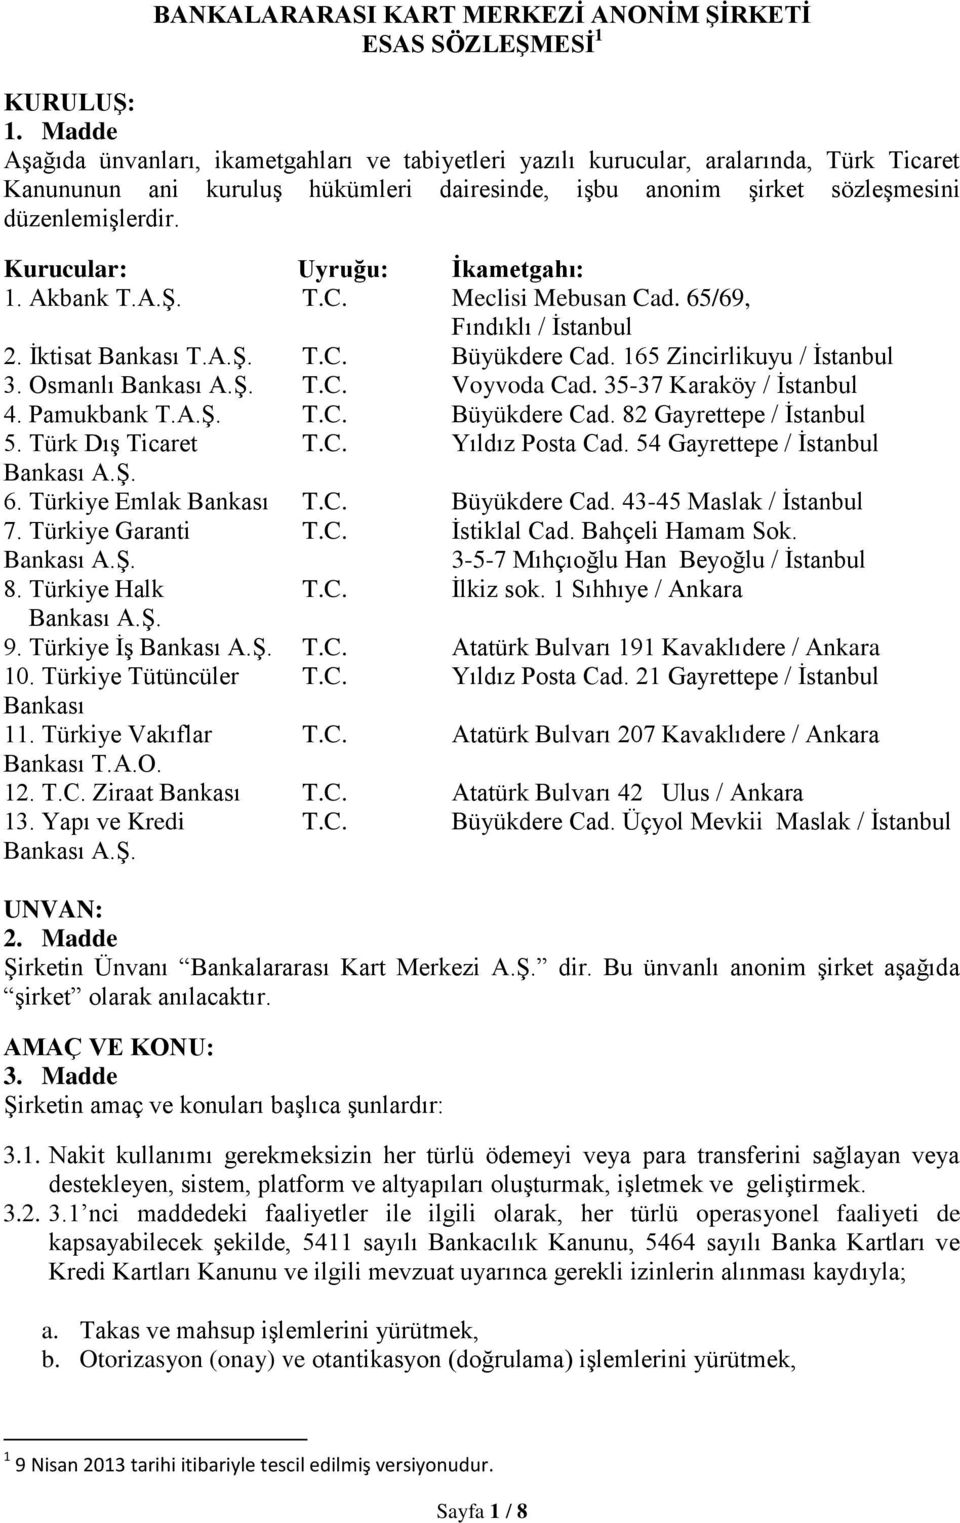 Kurucular: Uyruğu: İkametgahı: 1. Akbank T.A.Ş. T.C. Meclisi Mebusan Cad. 65/69, Fındıklı / İstanbul 2. İktisat Bankası T.A.Ş. T.C. Büyükdere Cad. 165 Zincirlikuyu / İstanbul 3. Osmanlı Bankası A.Ş. T.C. Voyvoda Cad.